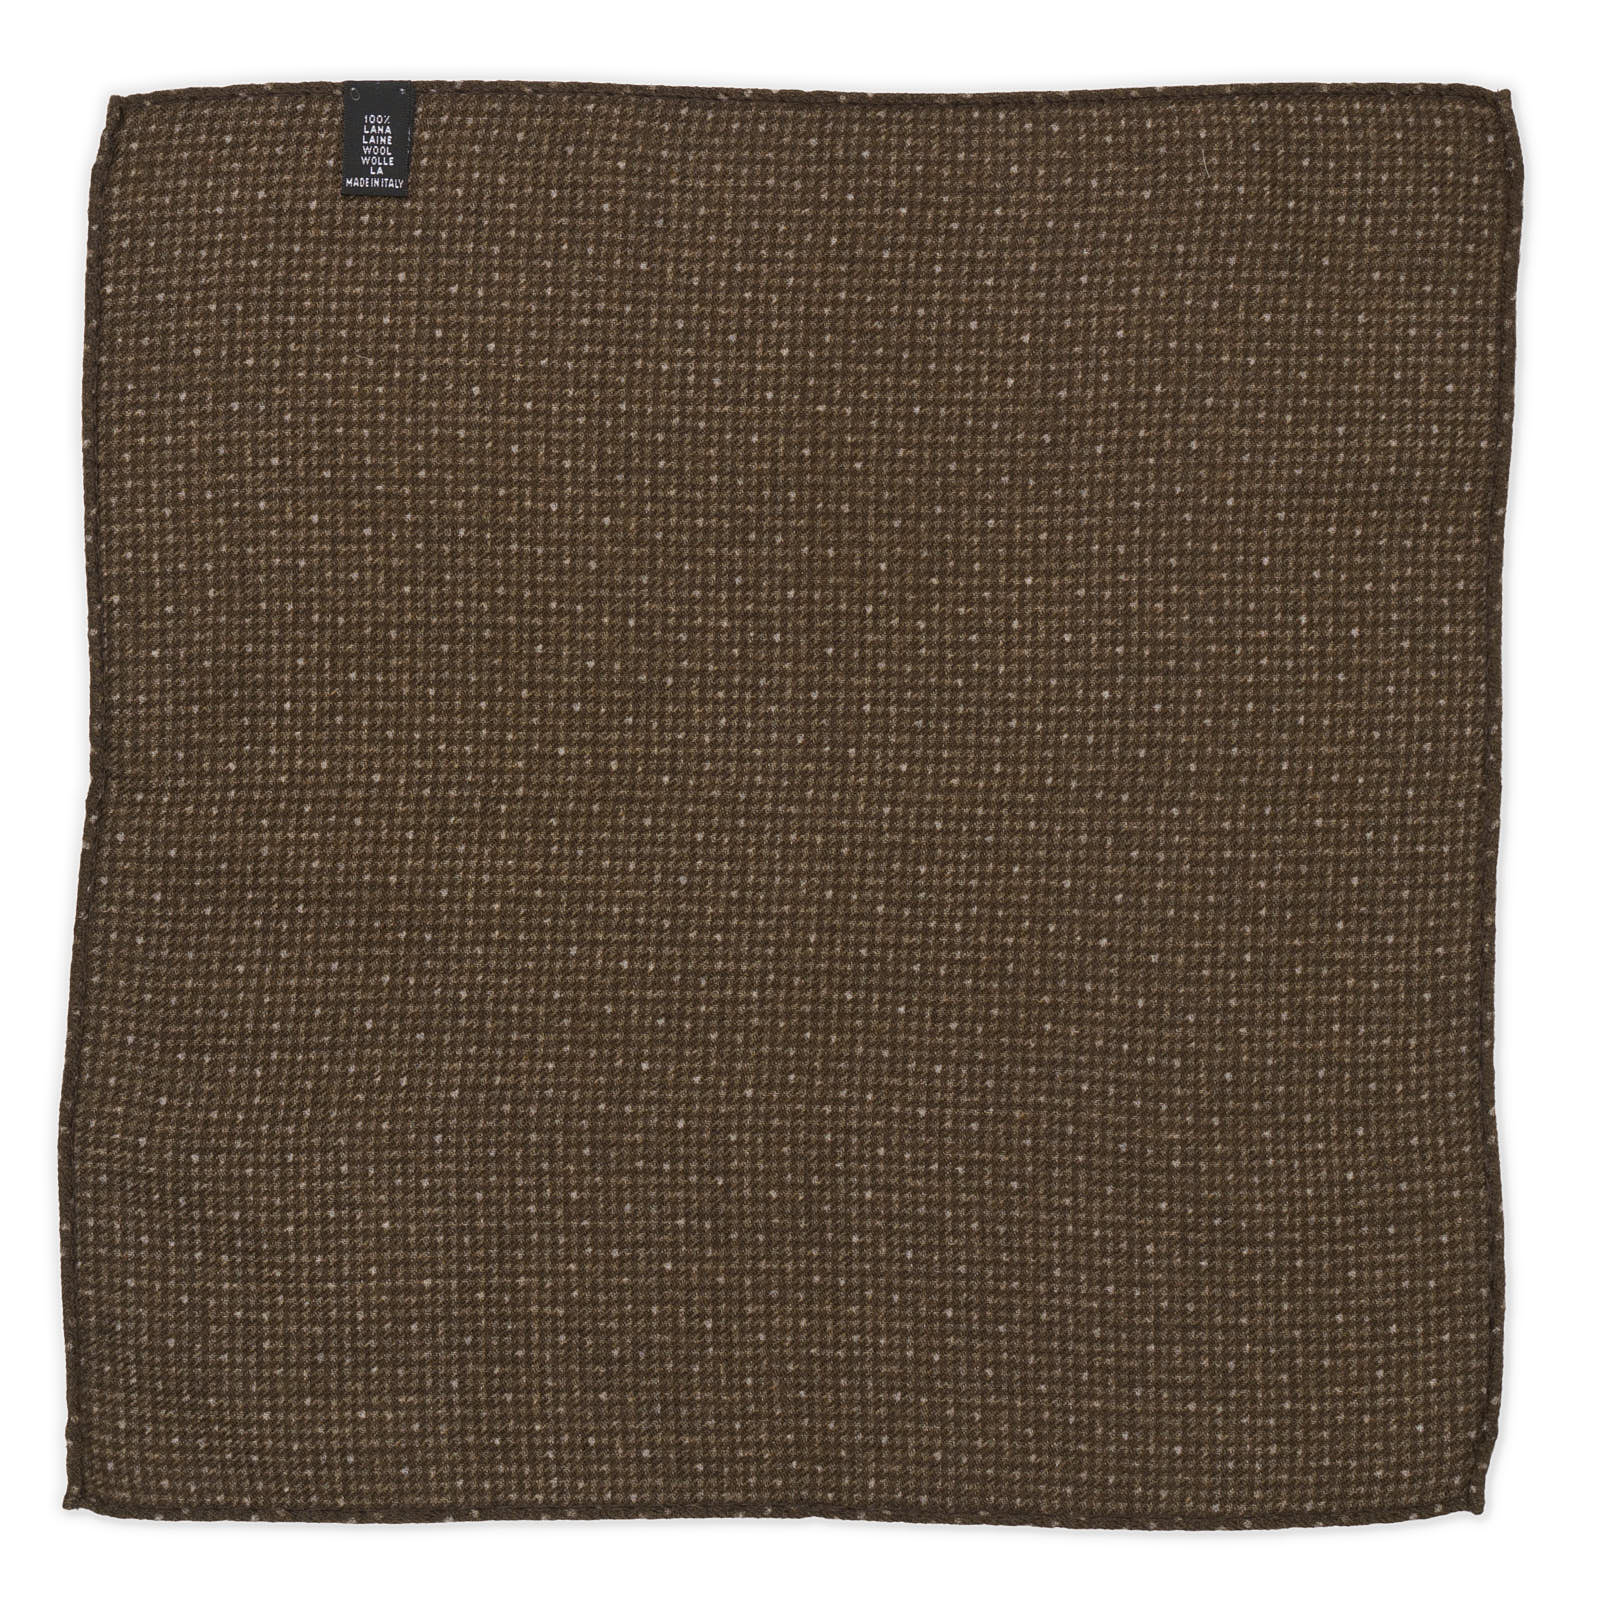 VANNUCCI Milano Handmade Brown Dot Wool Pocket Square NEW 32cm x 32cm